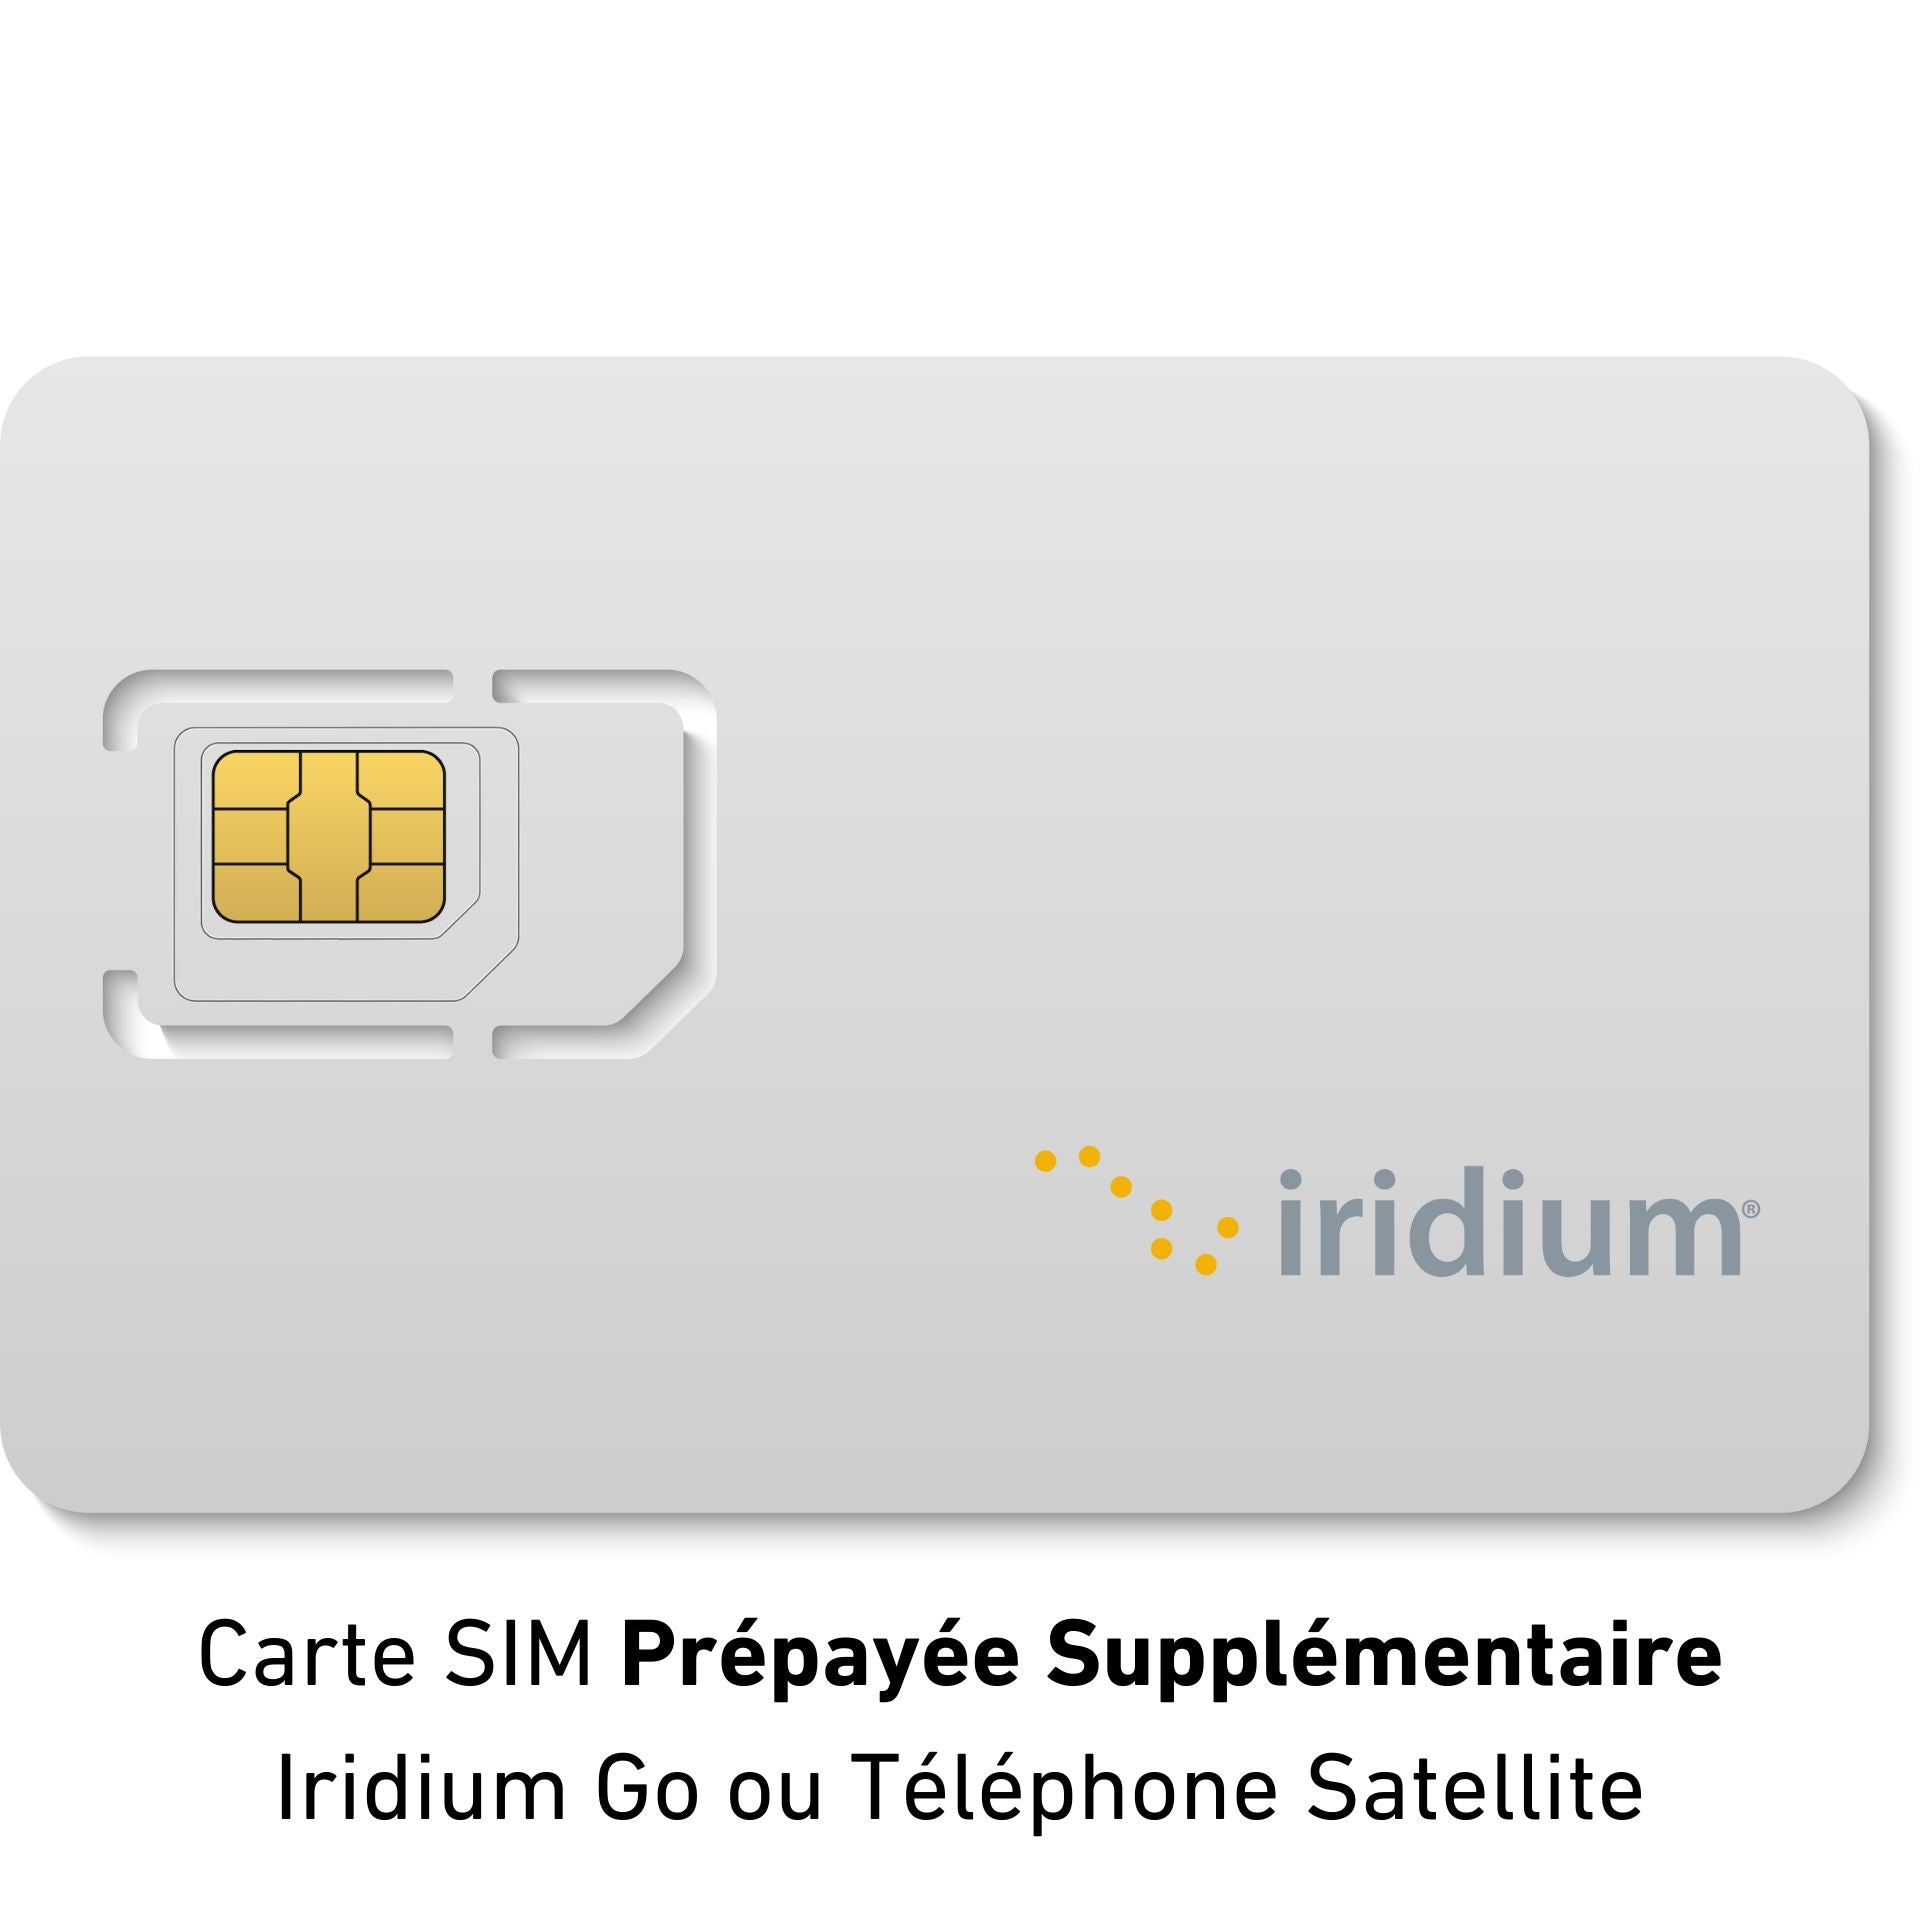 Additional IRIDIUM SIM Card